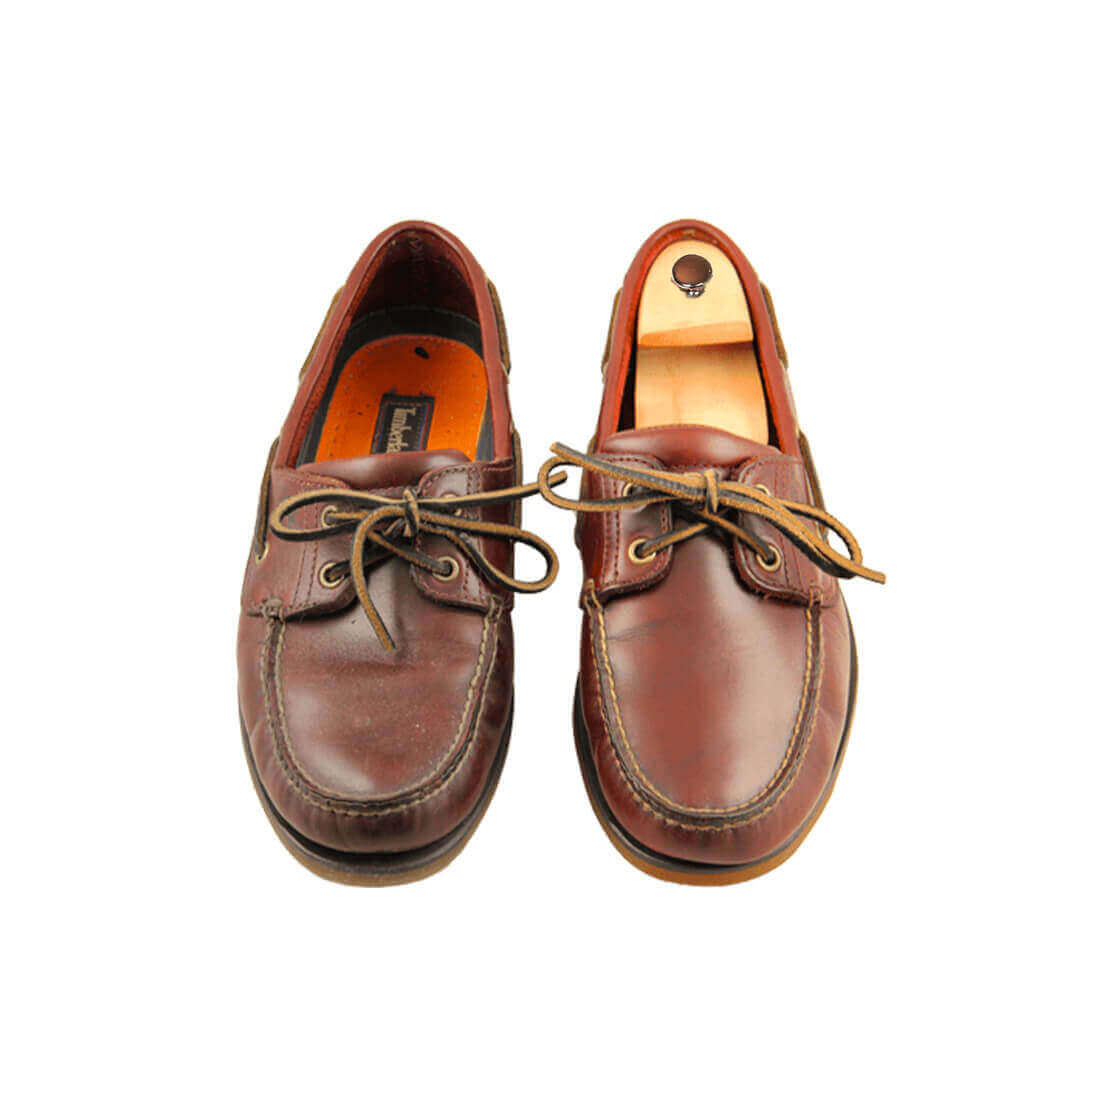 Oiled Leather Shoe Care